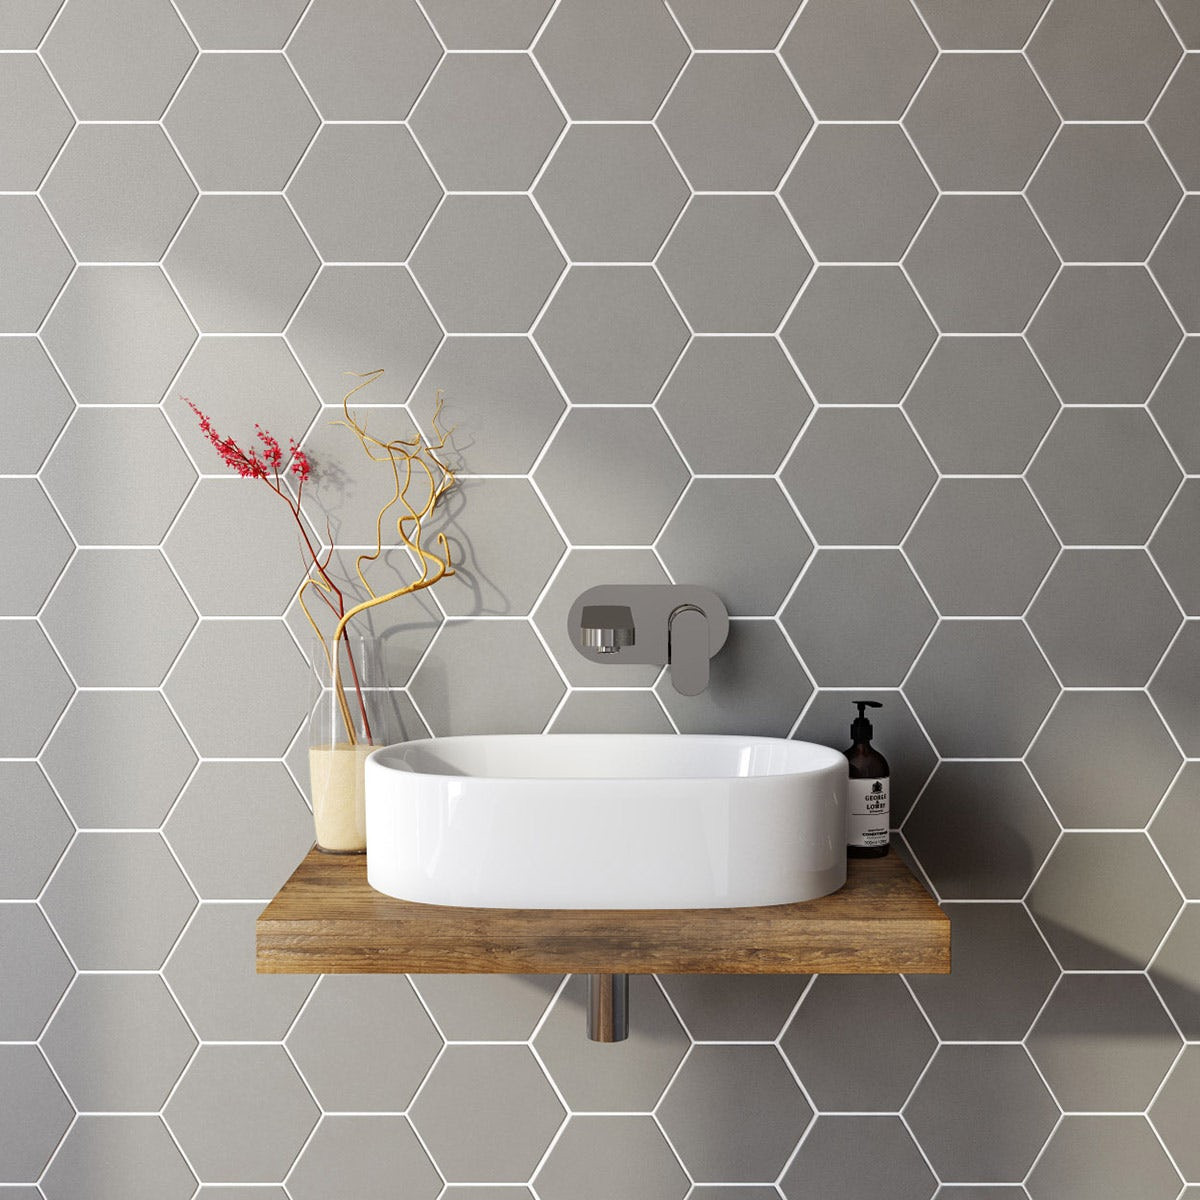 Hexagon Tiles Bathroom
 British Ceramic Tile Hex grey matt tile 175mm x 202mm